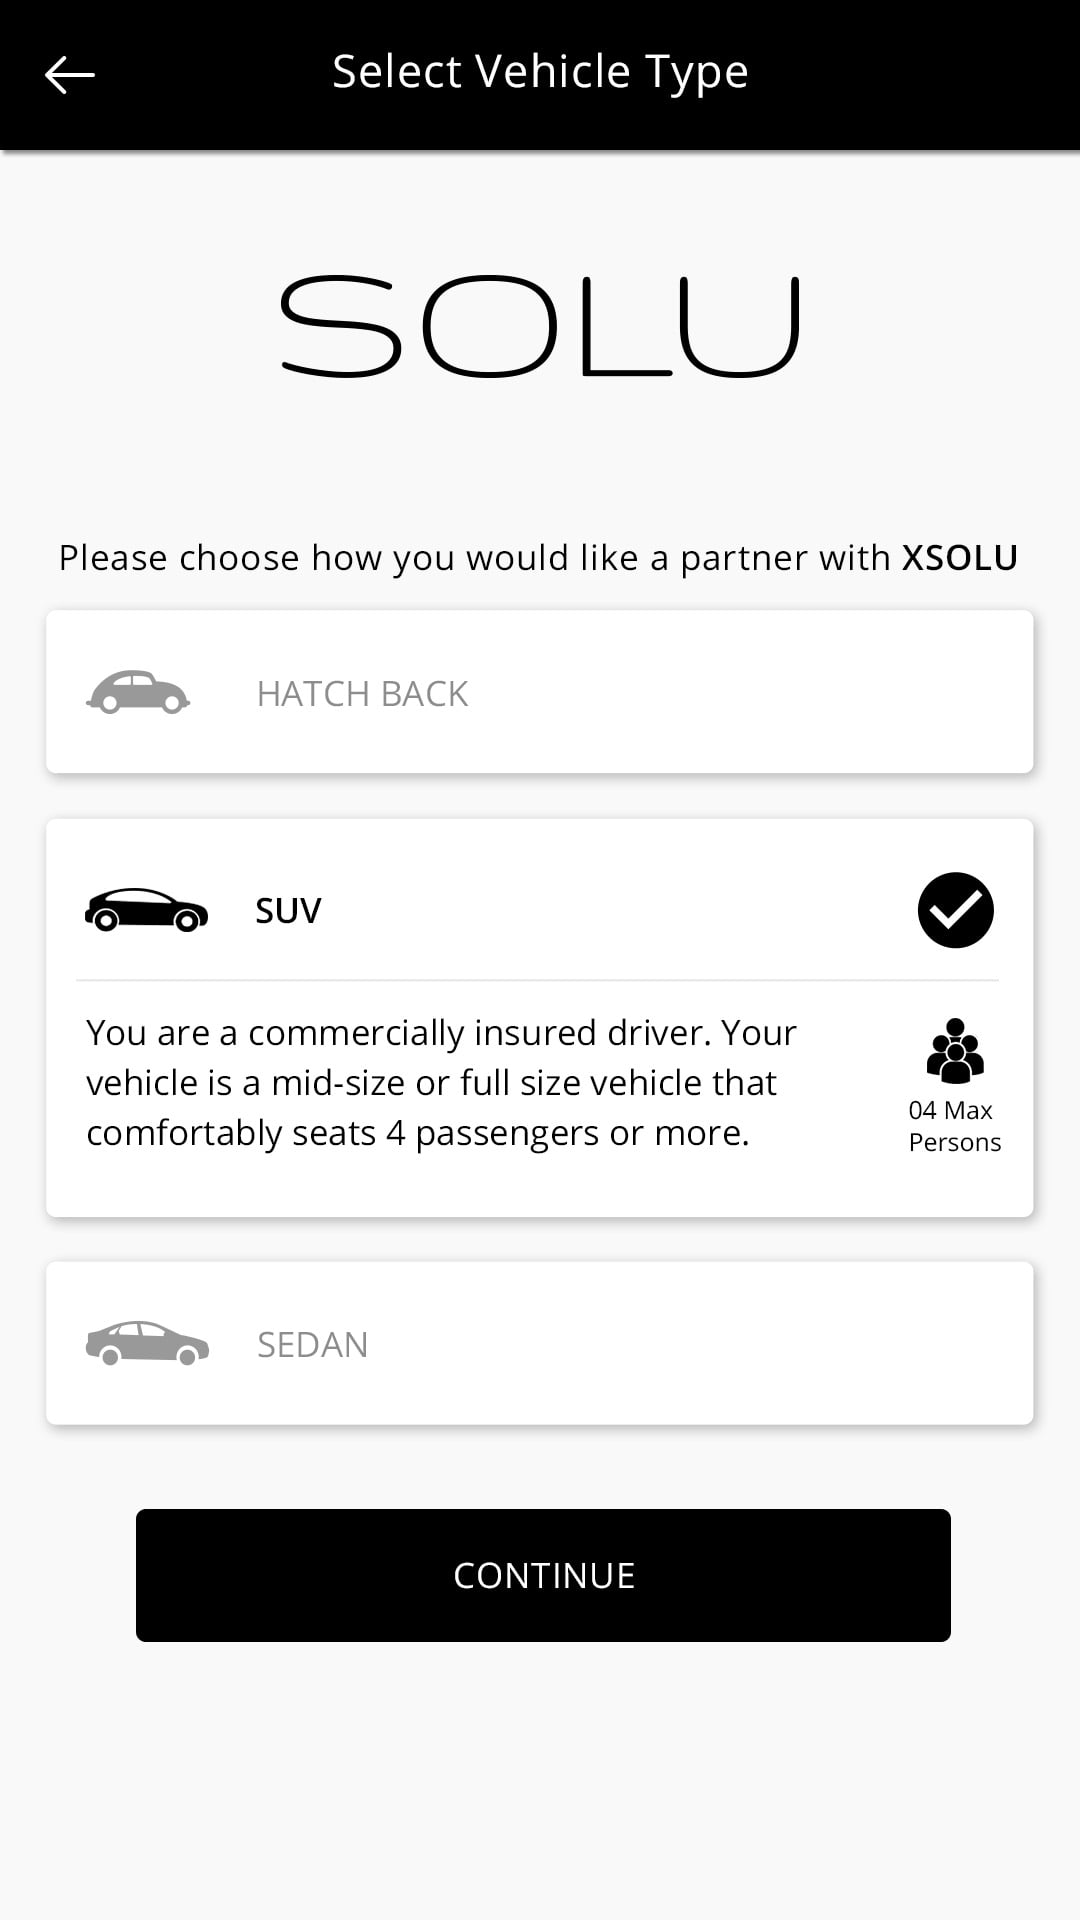 Solu (ride sharing app) Select Vehicle Type screen